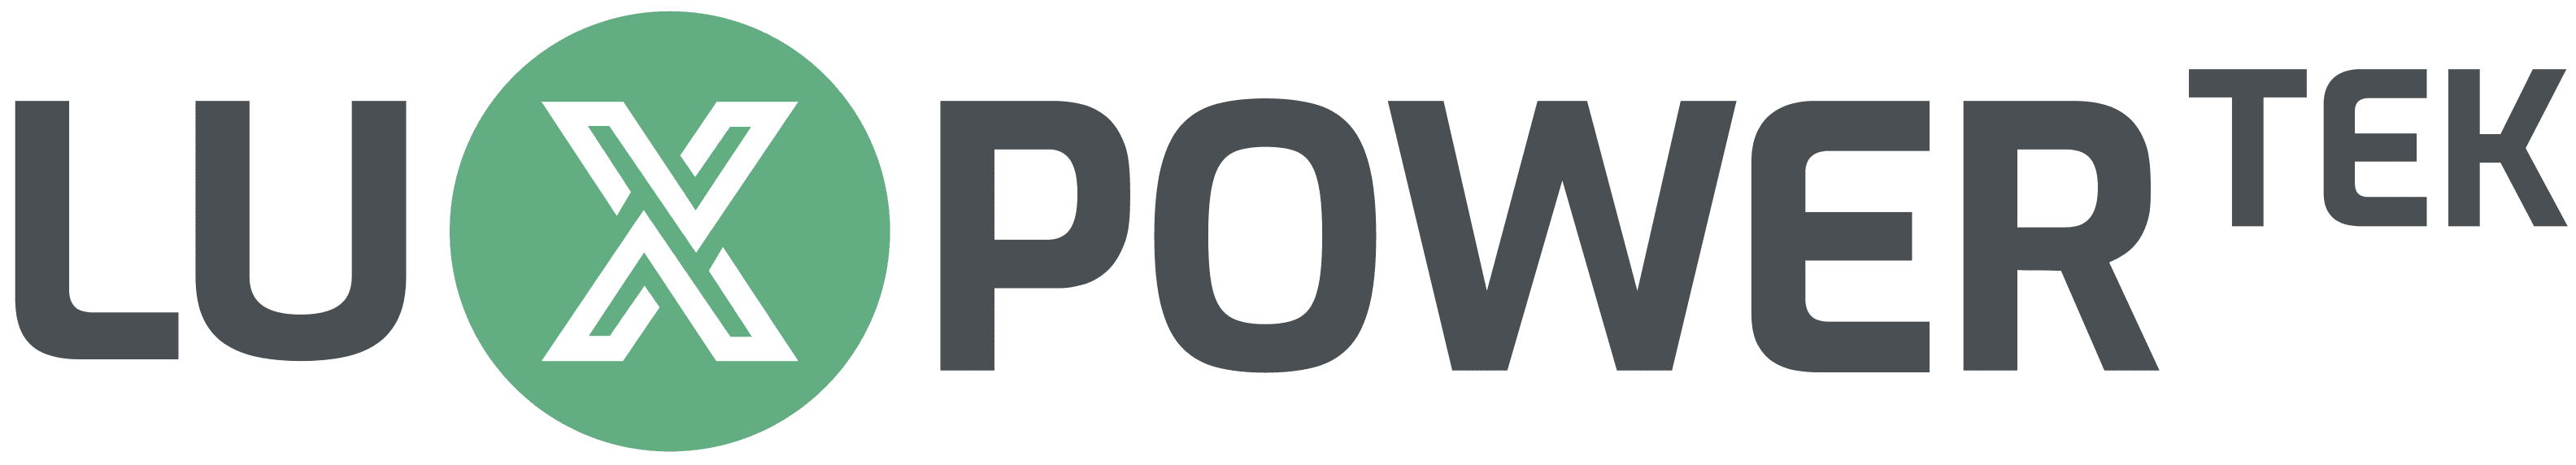 Luxpower logo